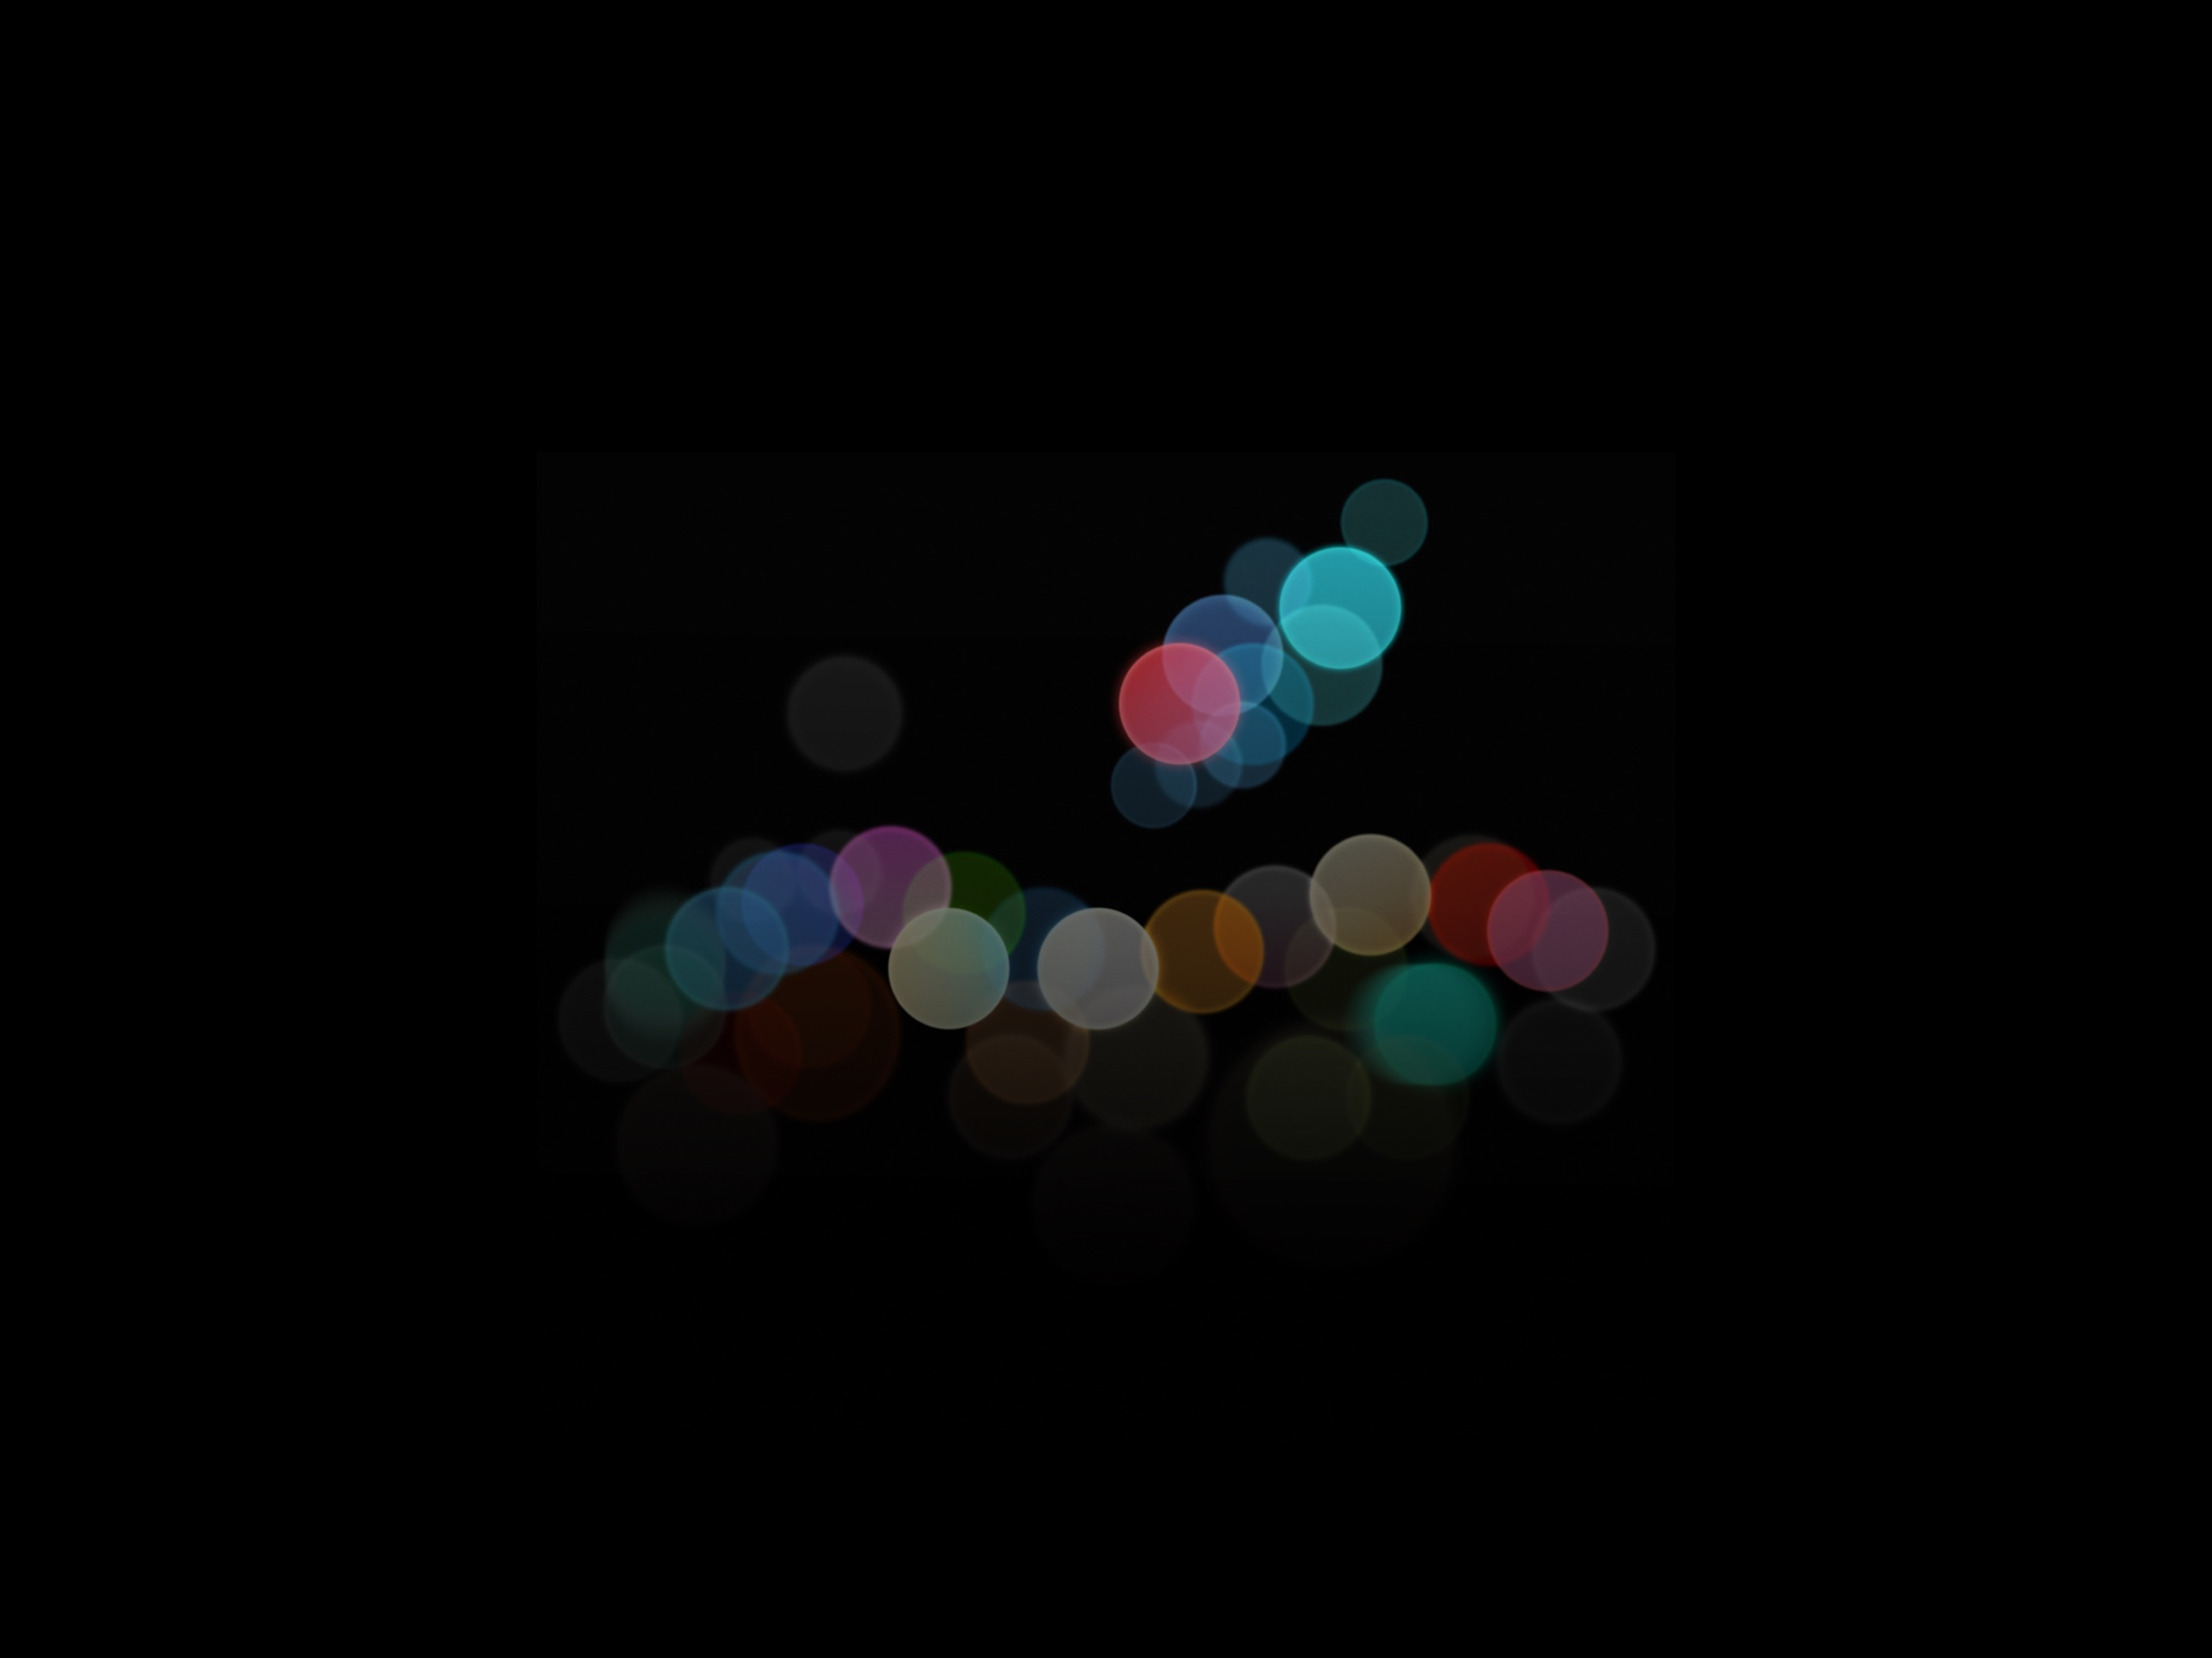 September-17-Apple-Media-Event-iPad-Pro